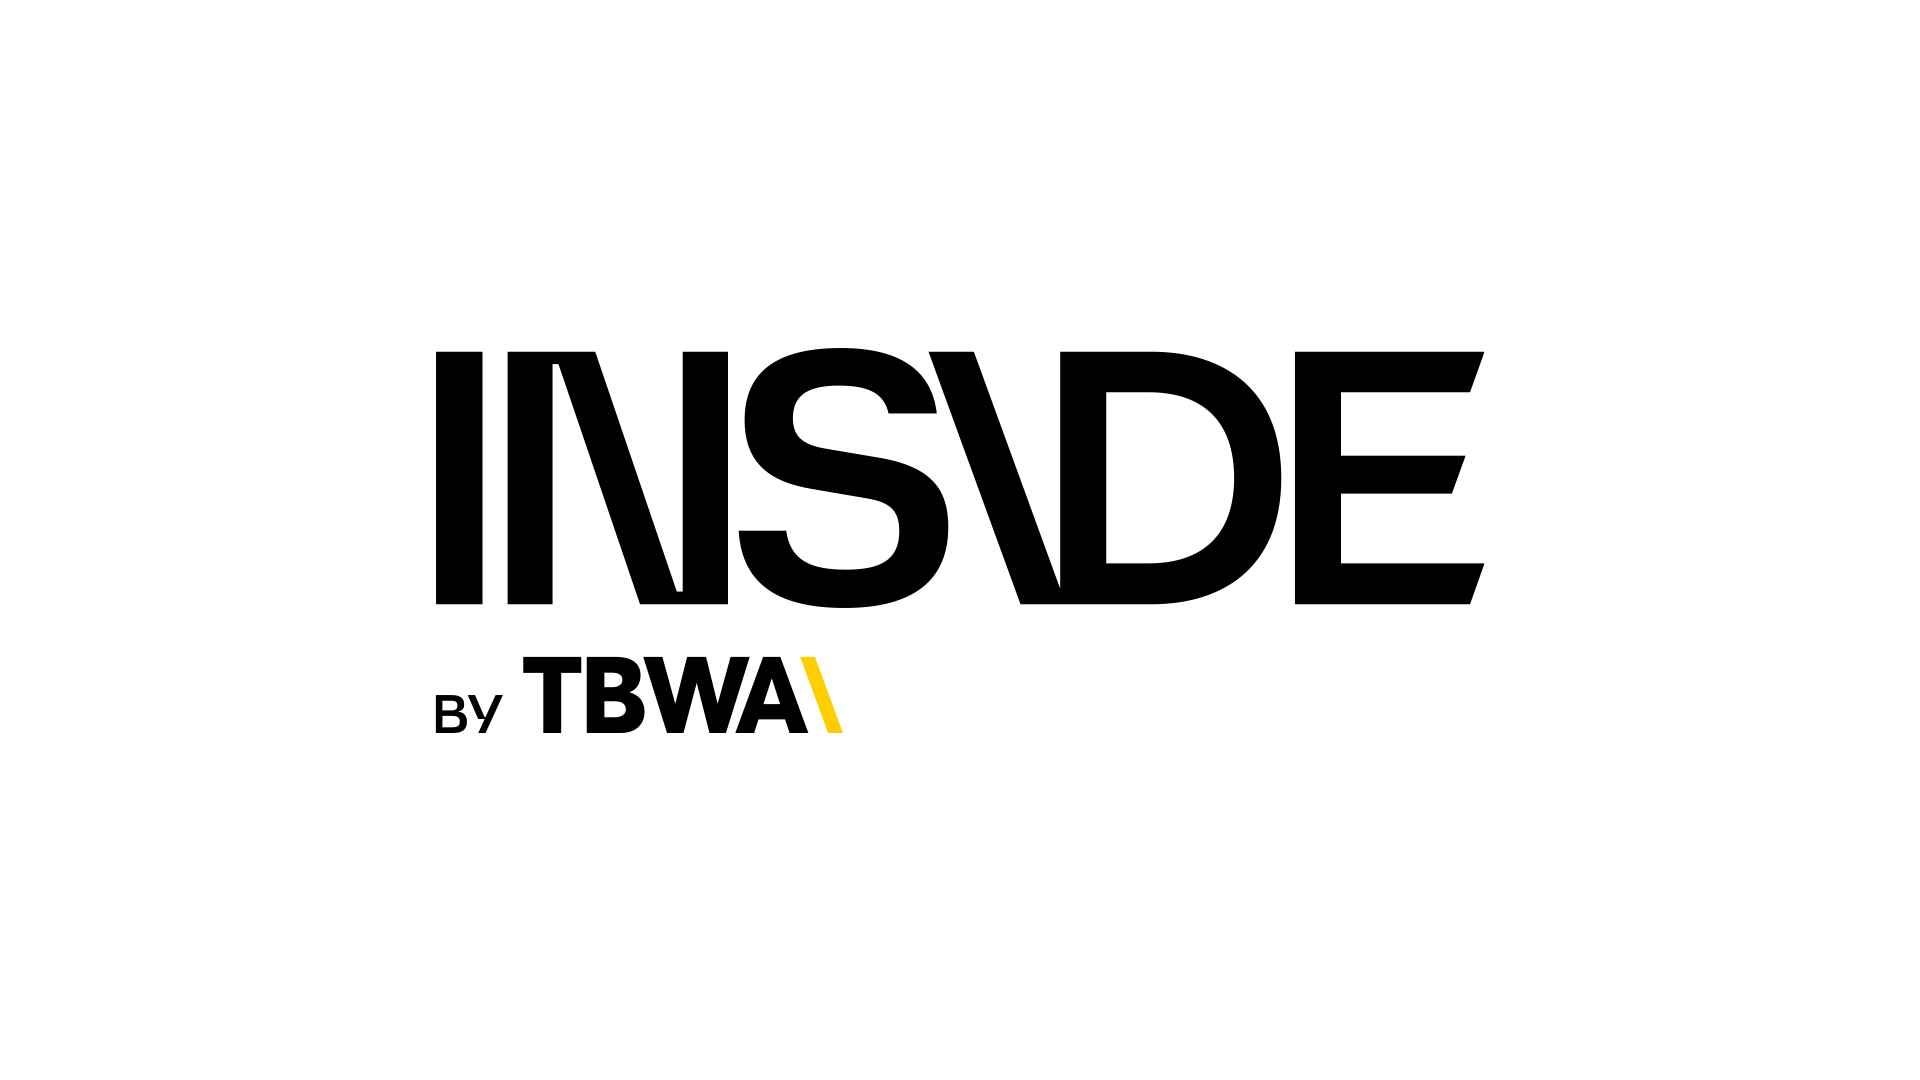 INSIDE by TBWA logo